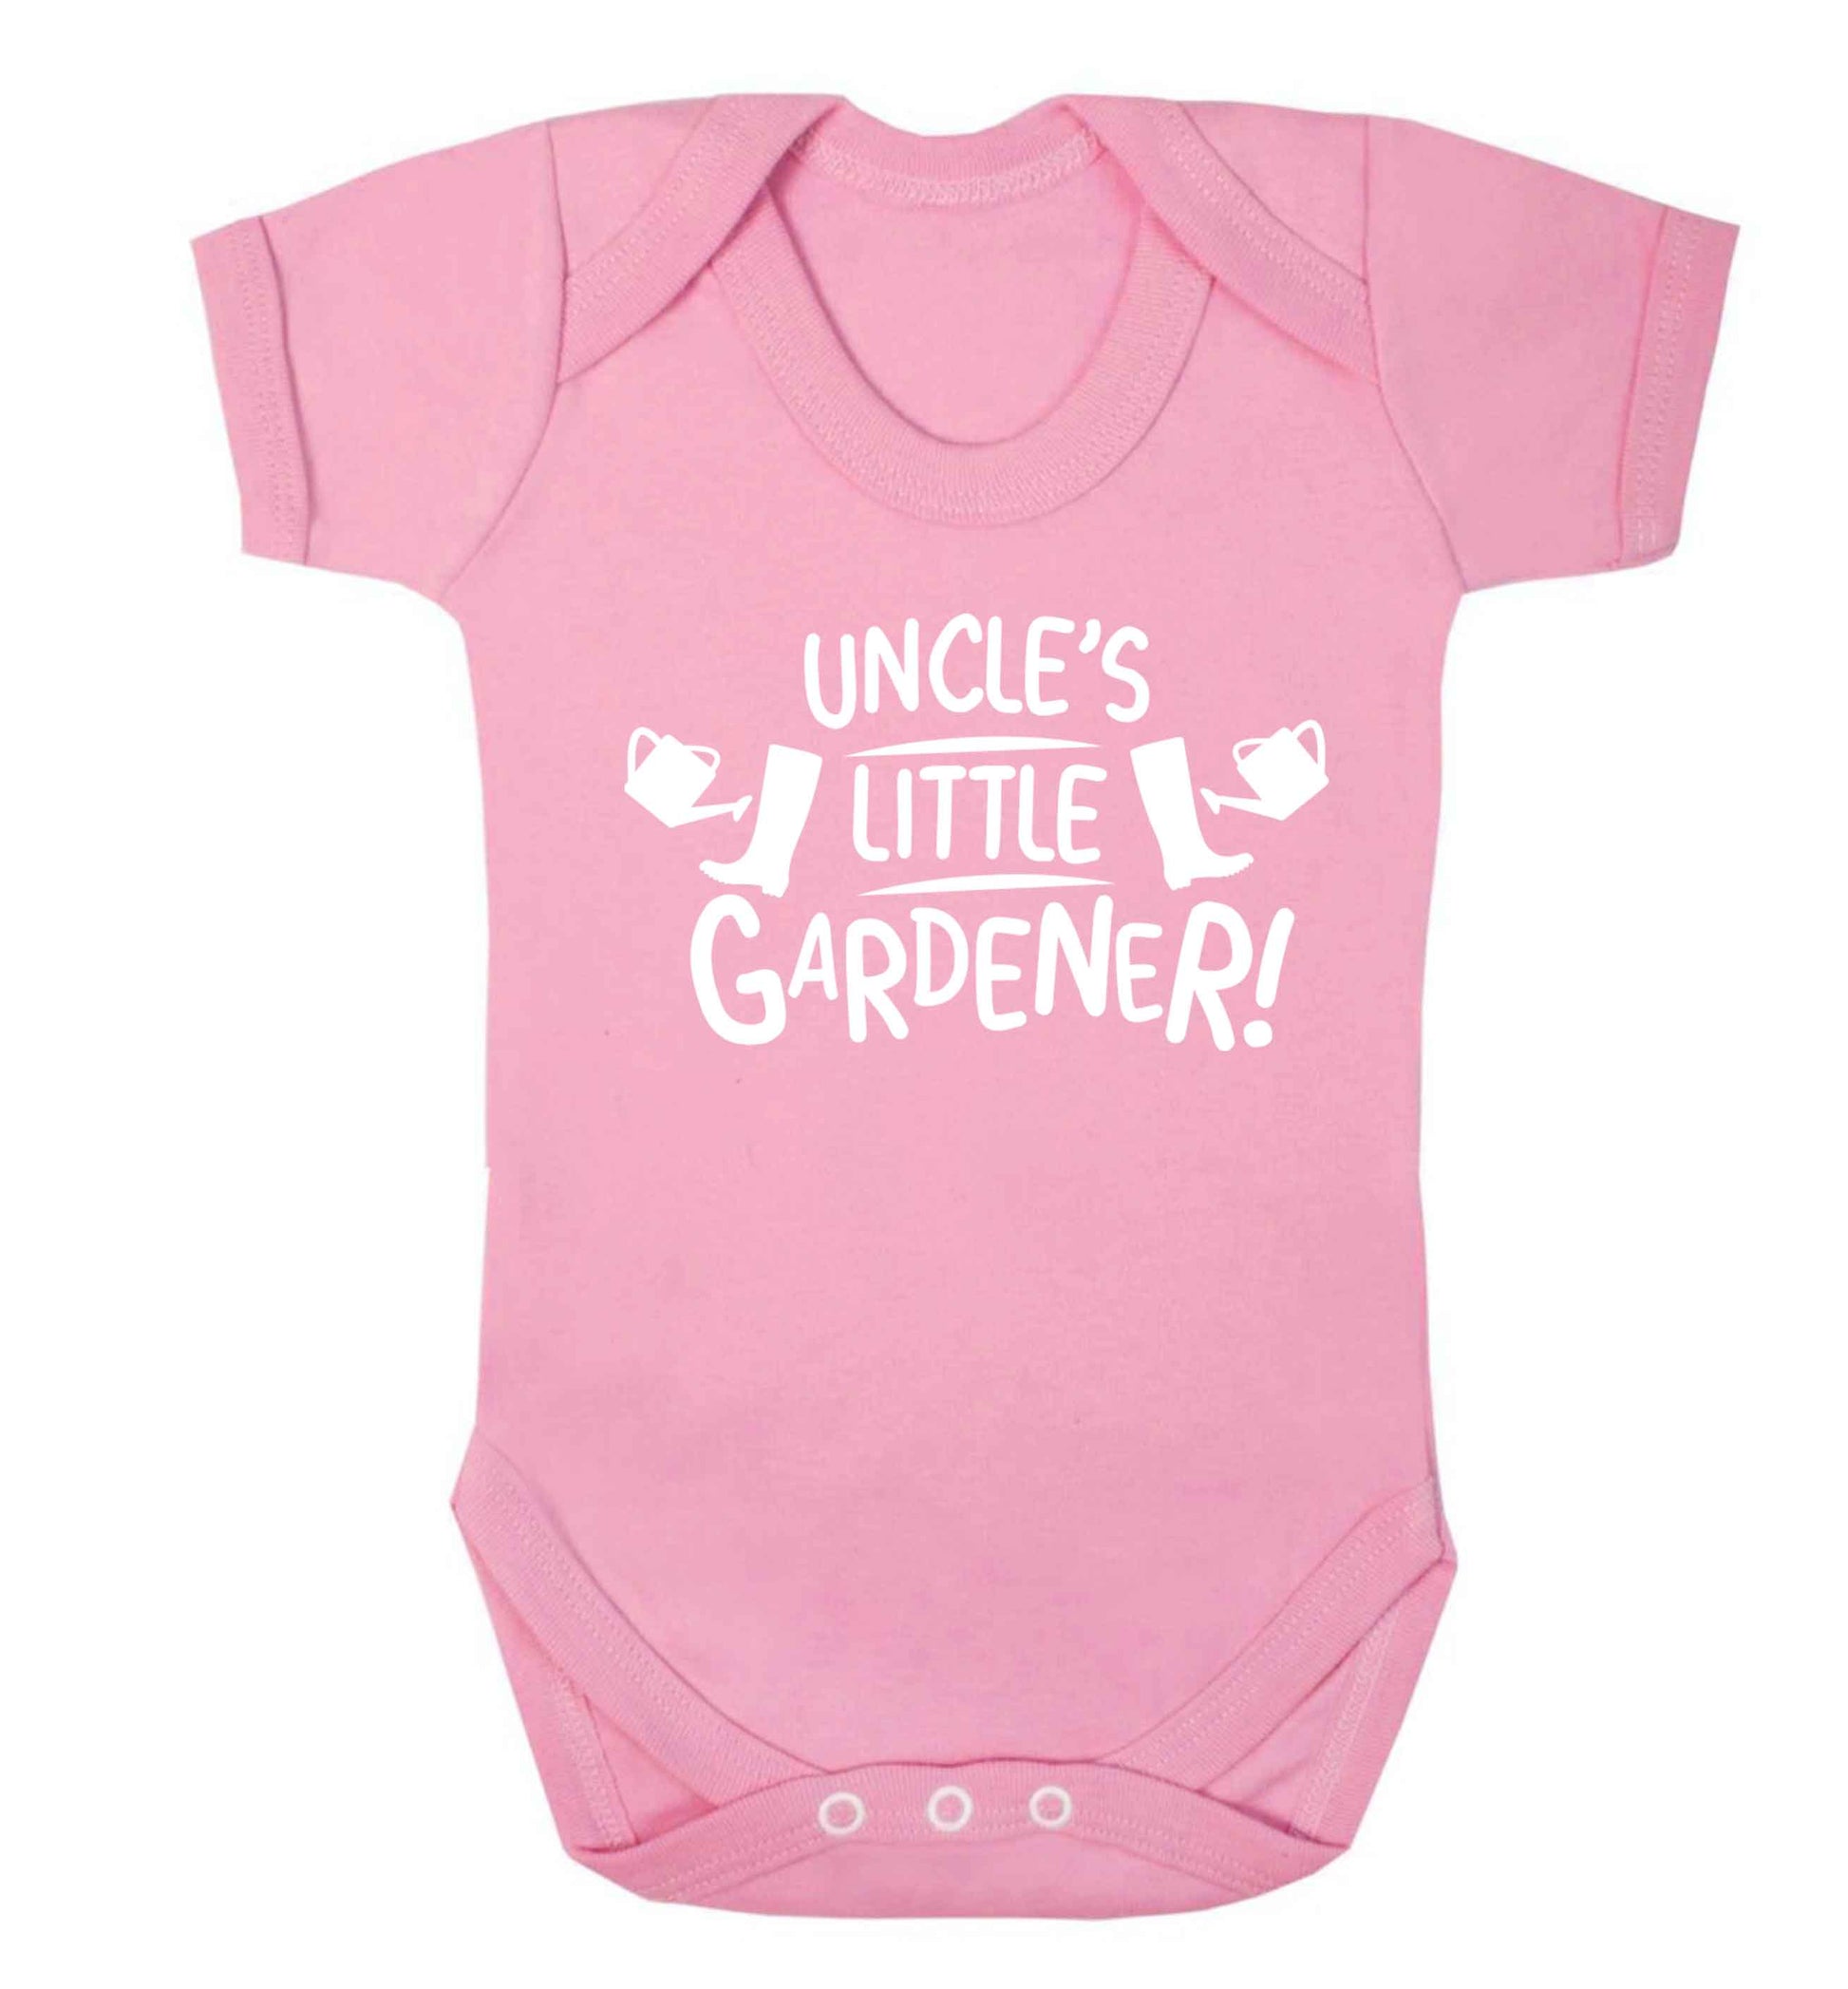 Uncle's little gardener Baby Vest pale pink 18-24 months